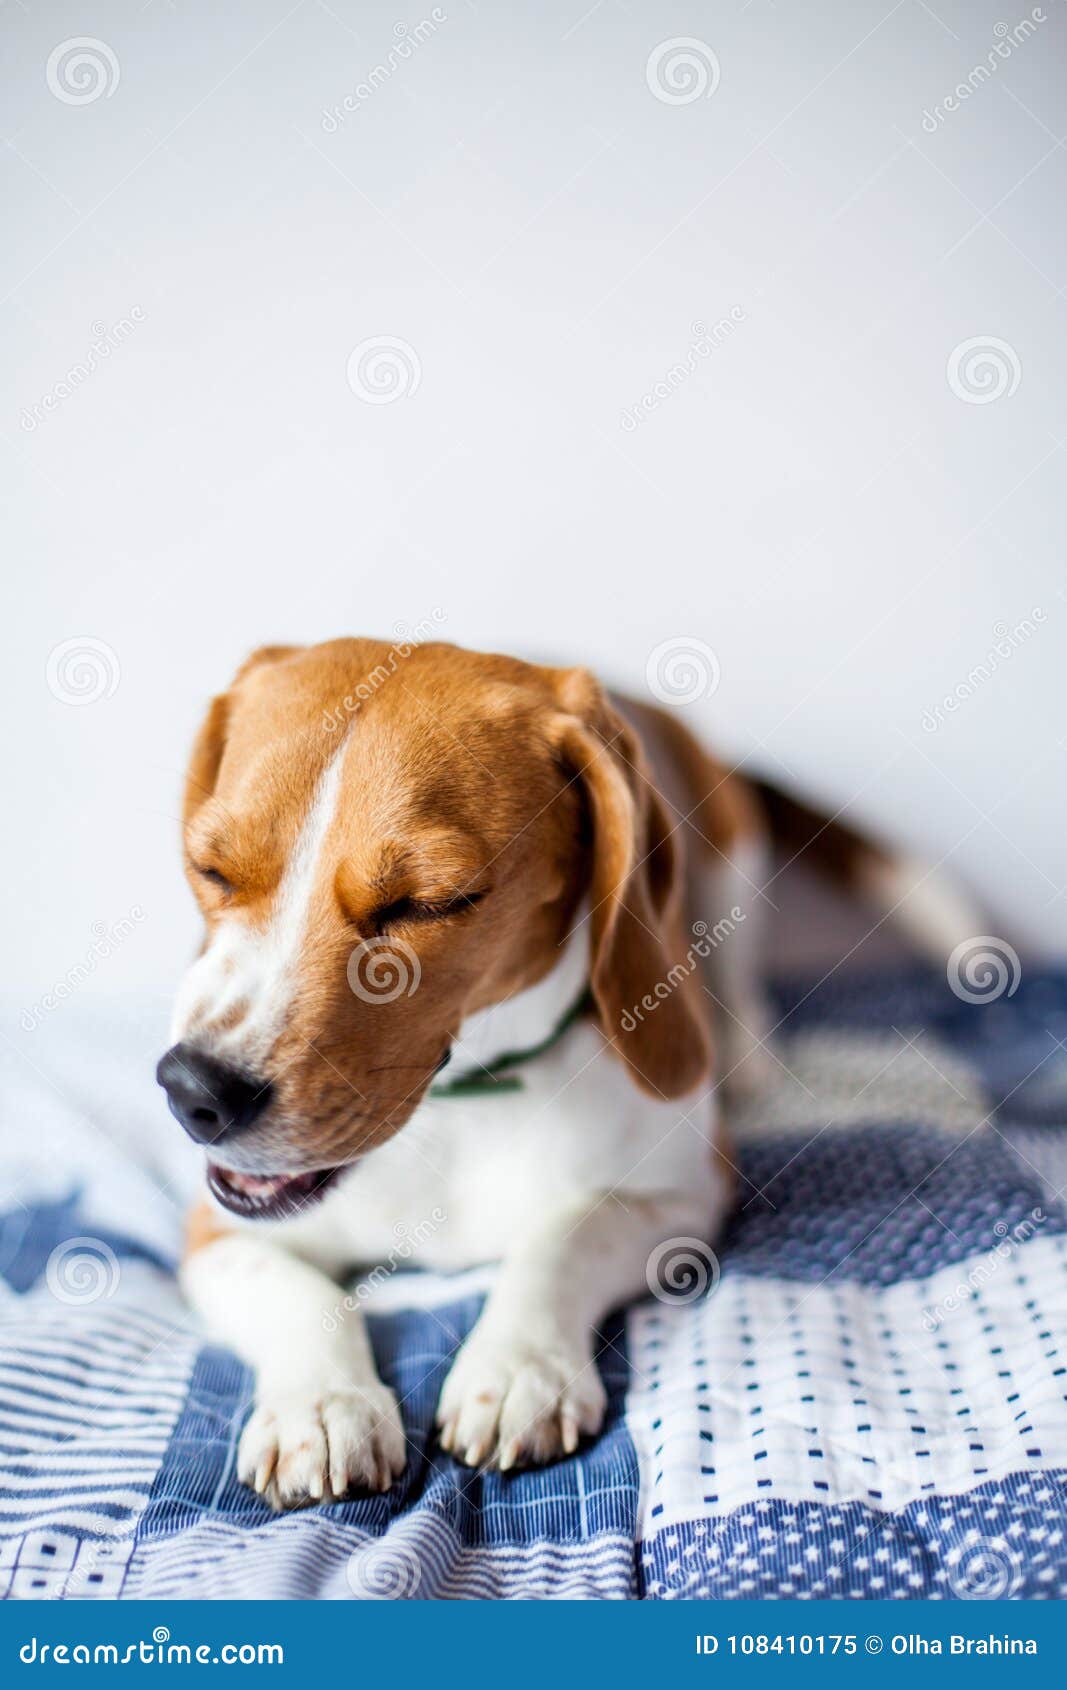 beagle dog on white background at home on bed. beagle sneezes